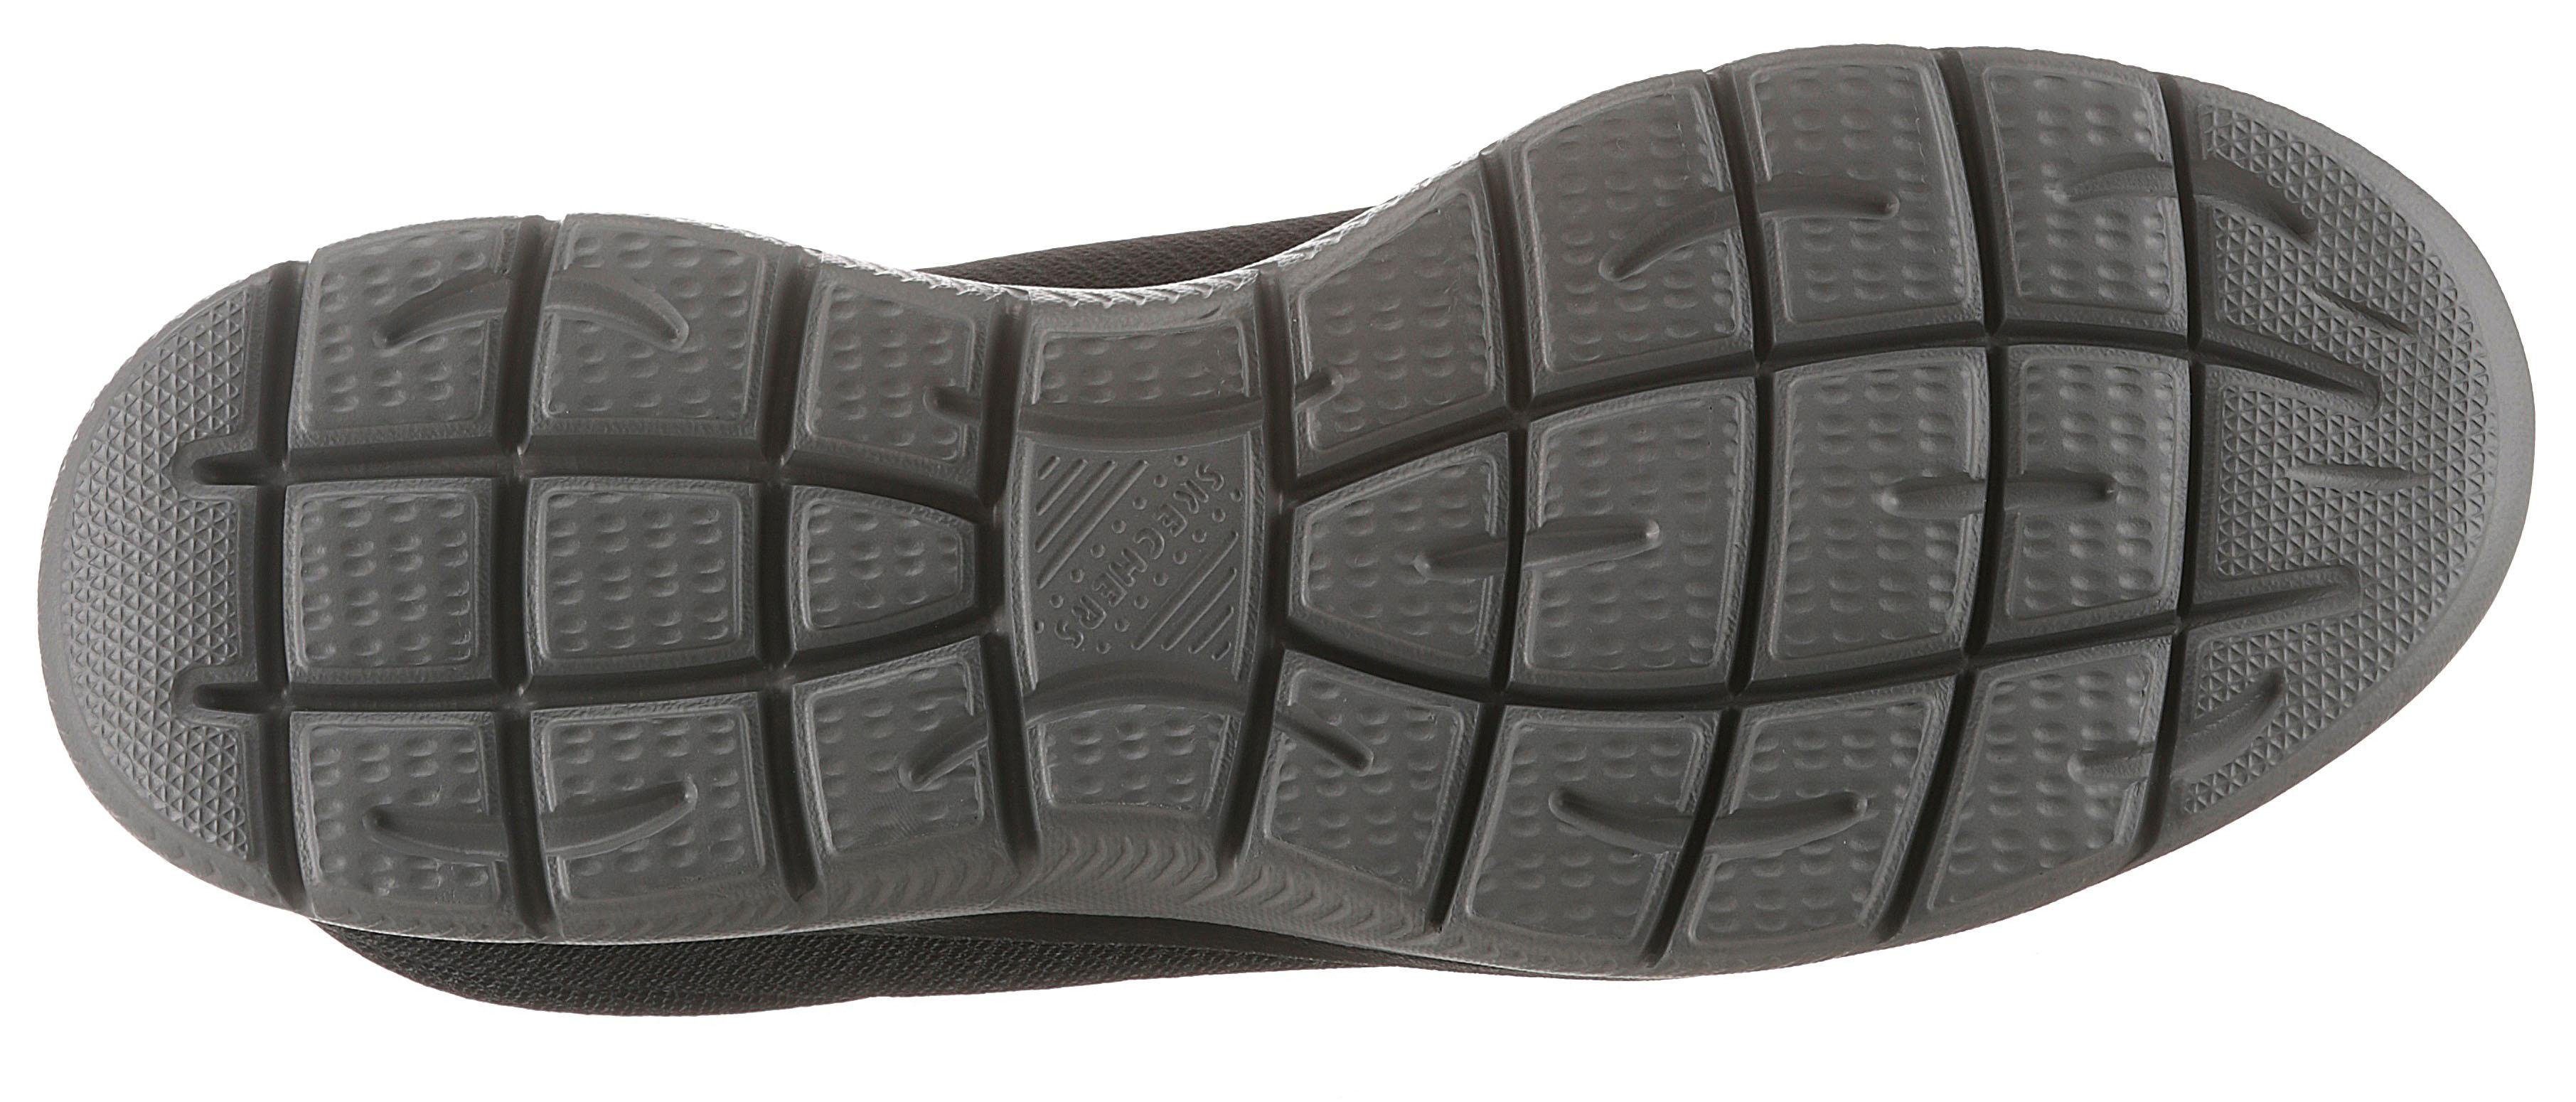 Sneaker mit Slip-On komfortabler black/charcoal Memory Foam-Ausstattung Summits Skechers